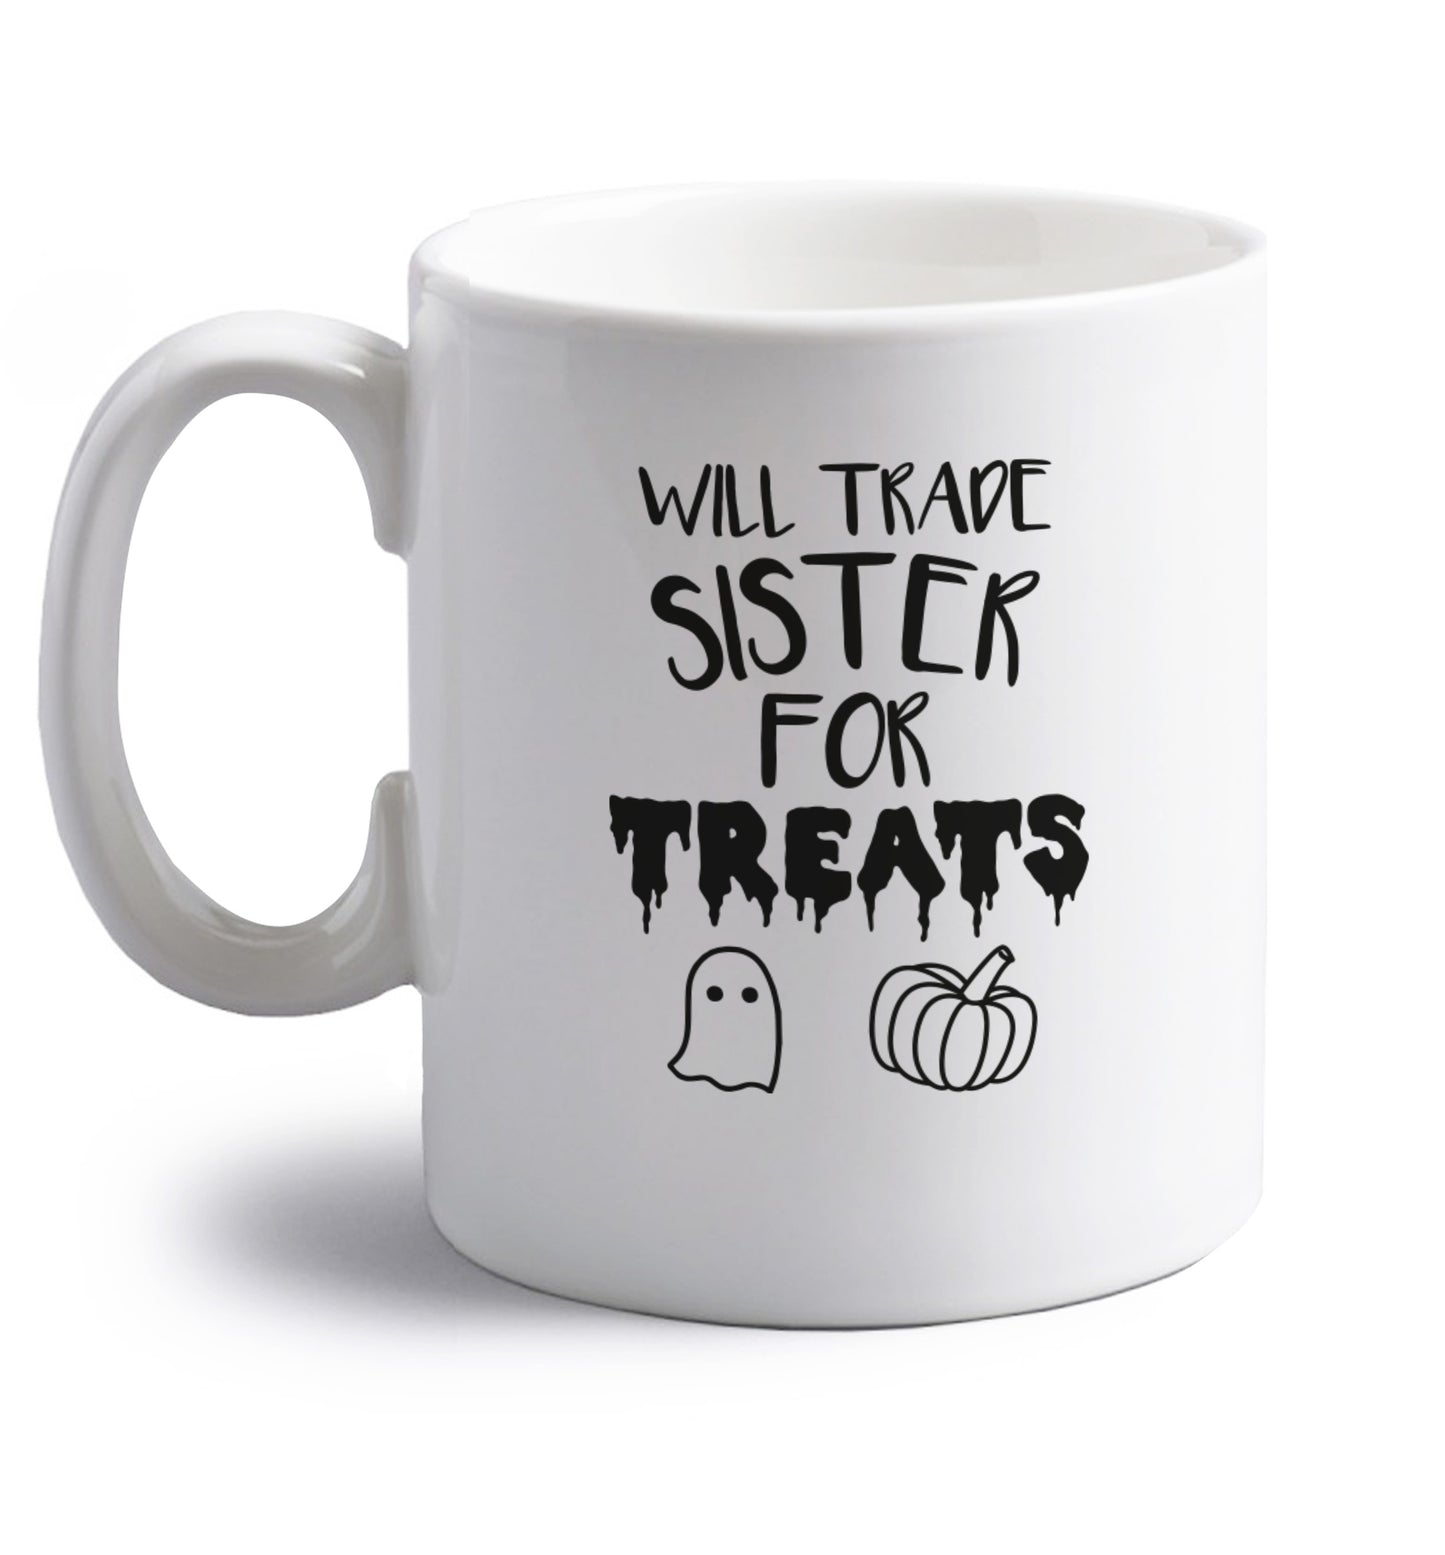 Will trade sister for treats right handed white ceramic mug 